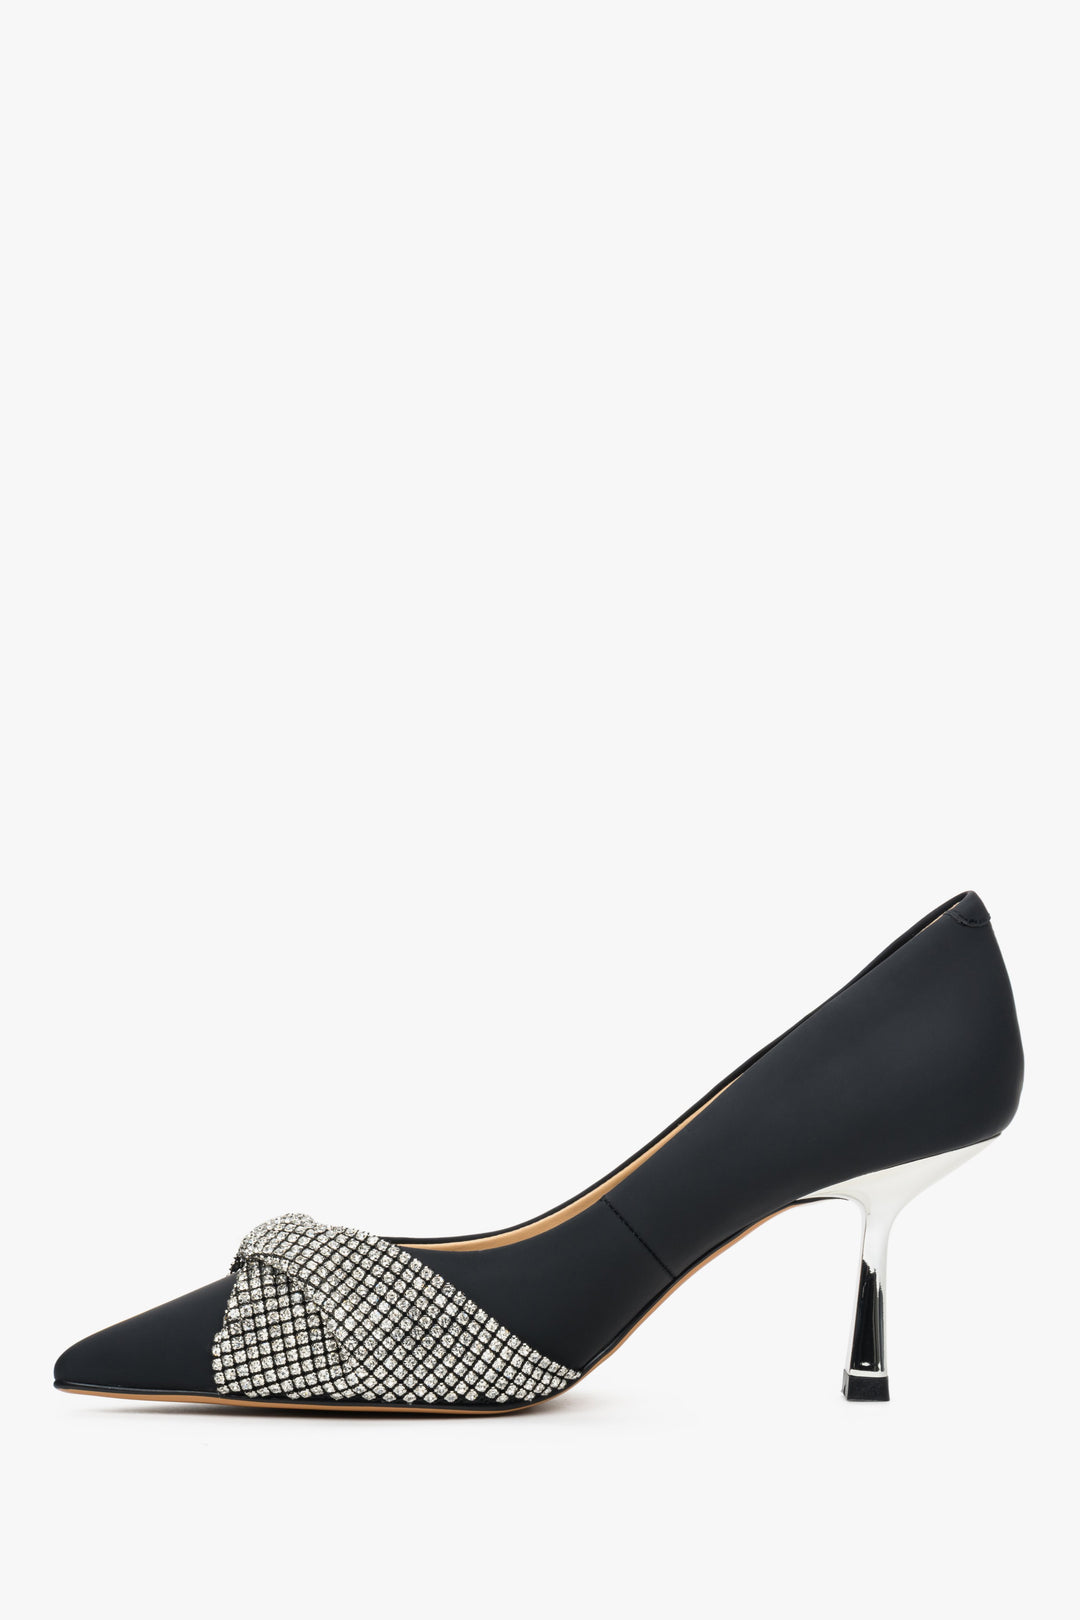 Women's black high heels by Estro.